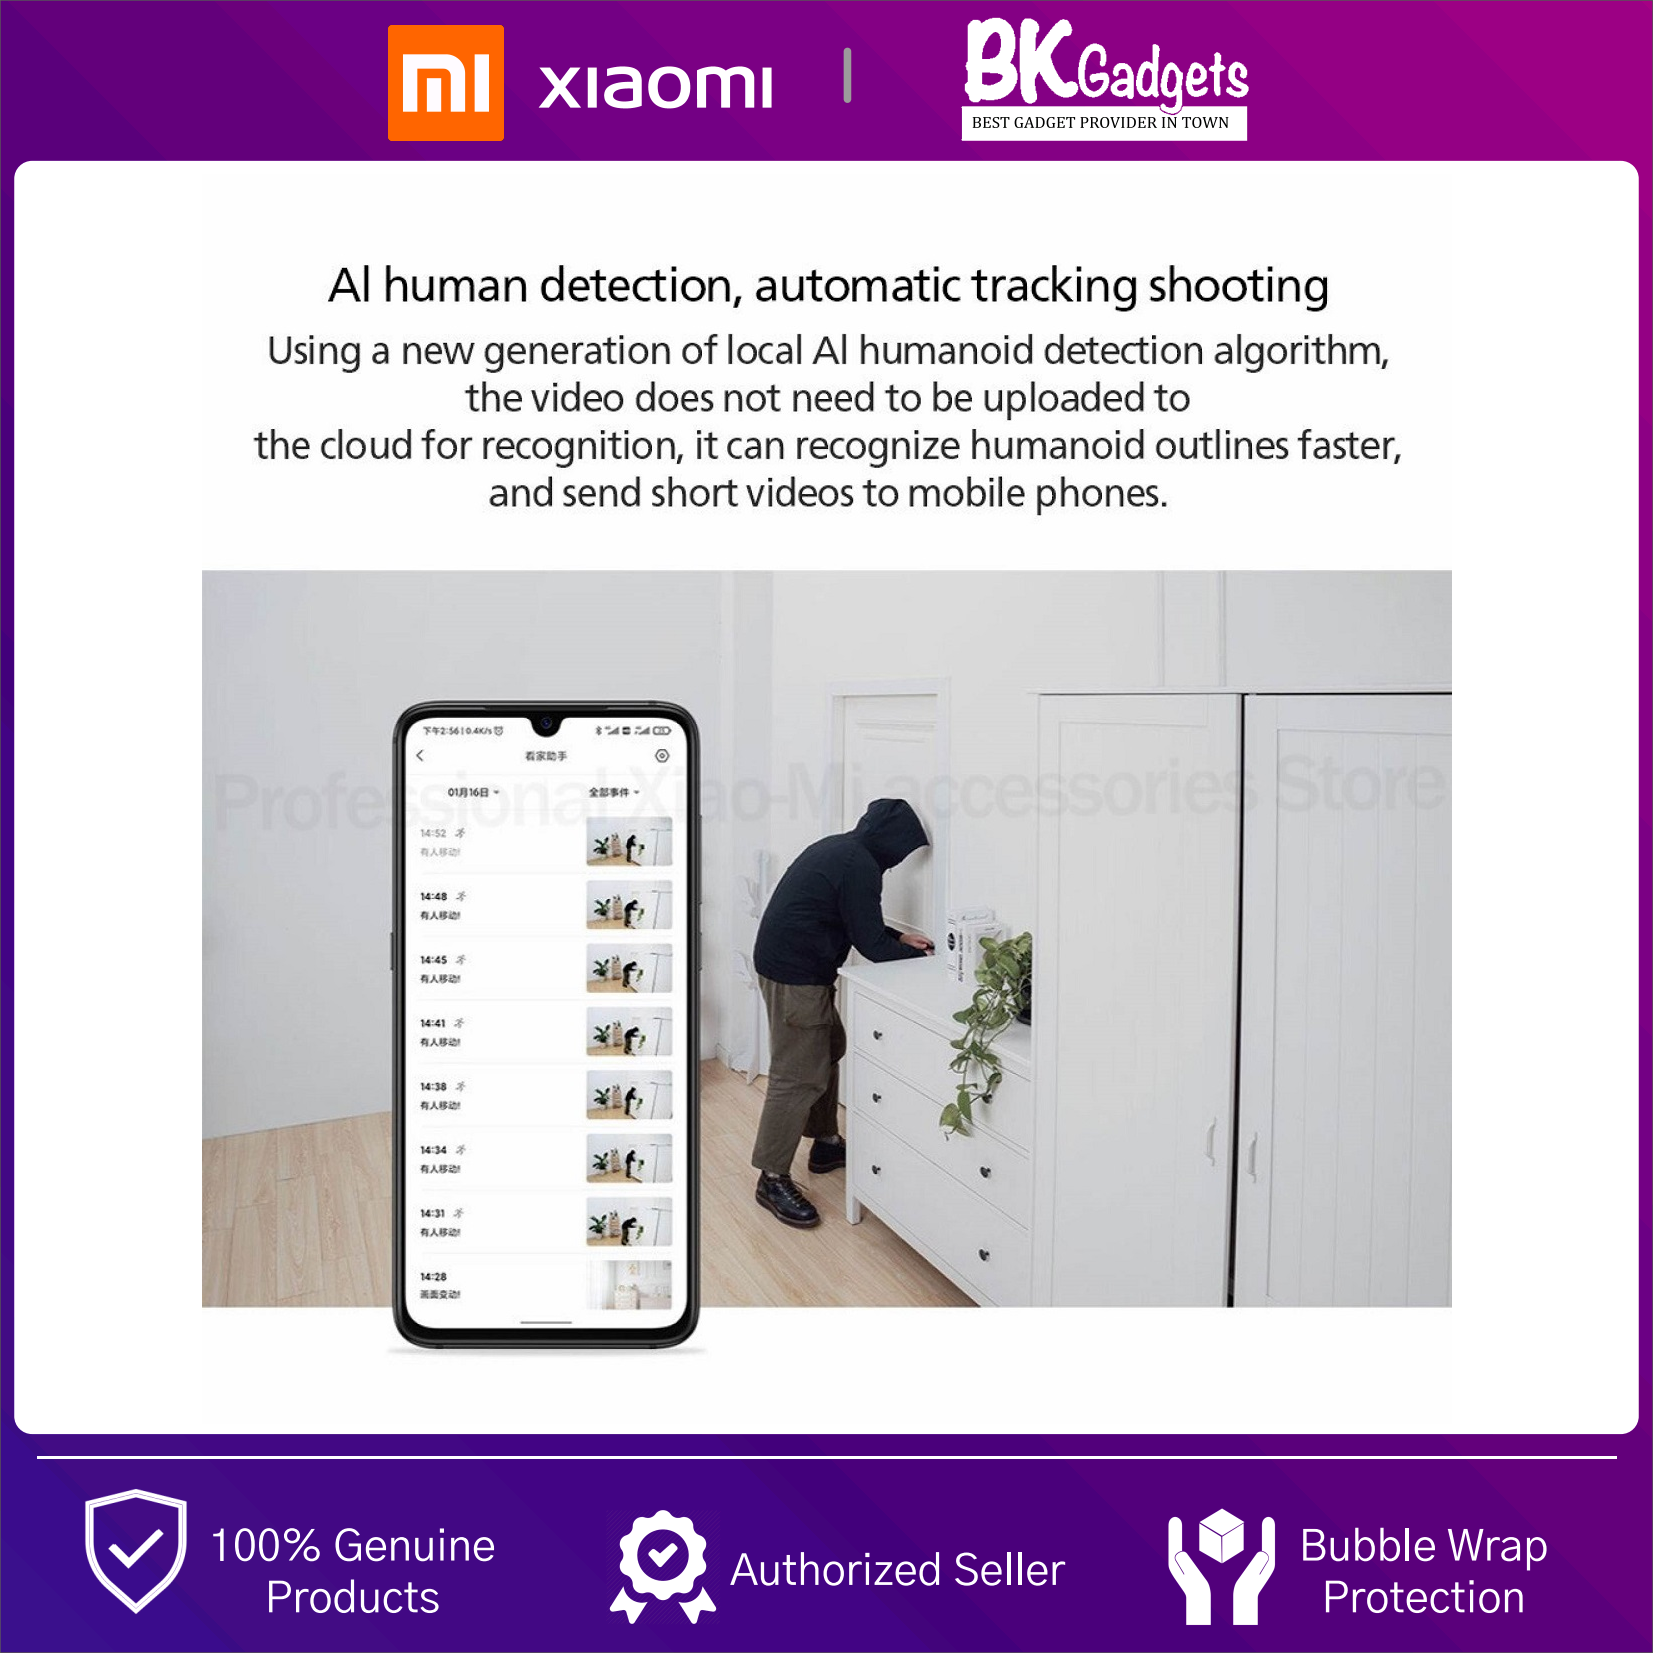 Xiaomi Mi 360 Home Security Camera 2K Pro - Smart IP Camera Ptz Pro 1296P 360 Panoramic 2K AI Detection Two-way Intercom WiFi Home Security For MI Home App